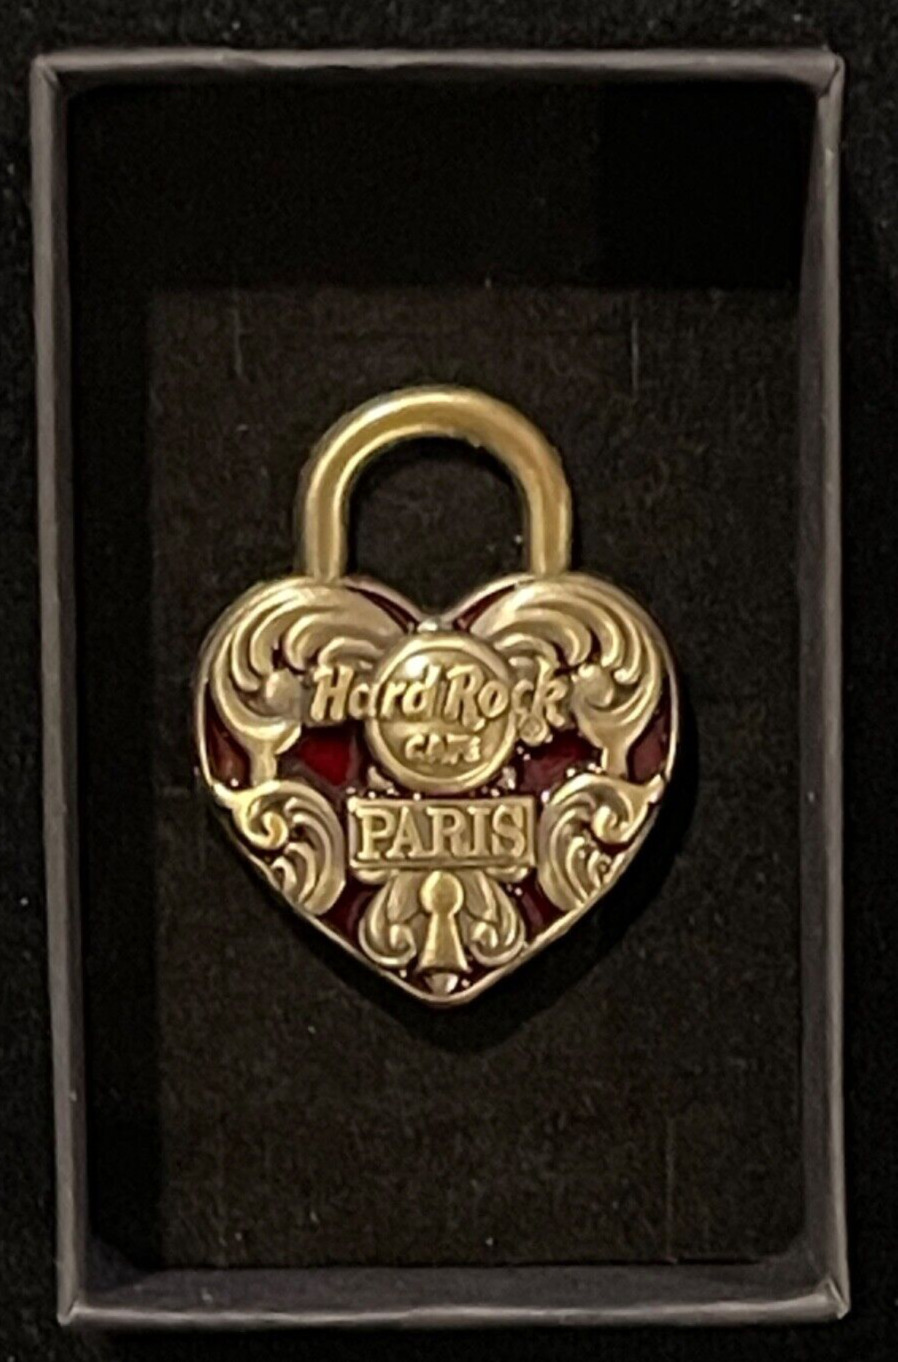 Hard Rock Cafe Paris 3D Love Lock Pin with Gift Box